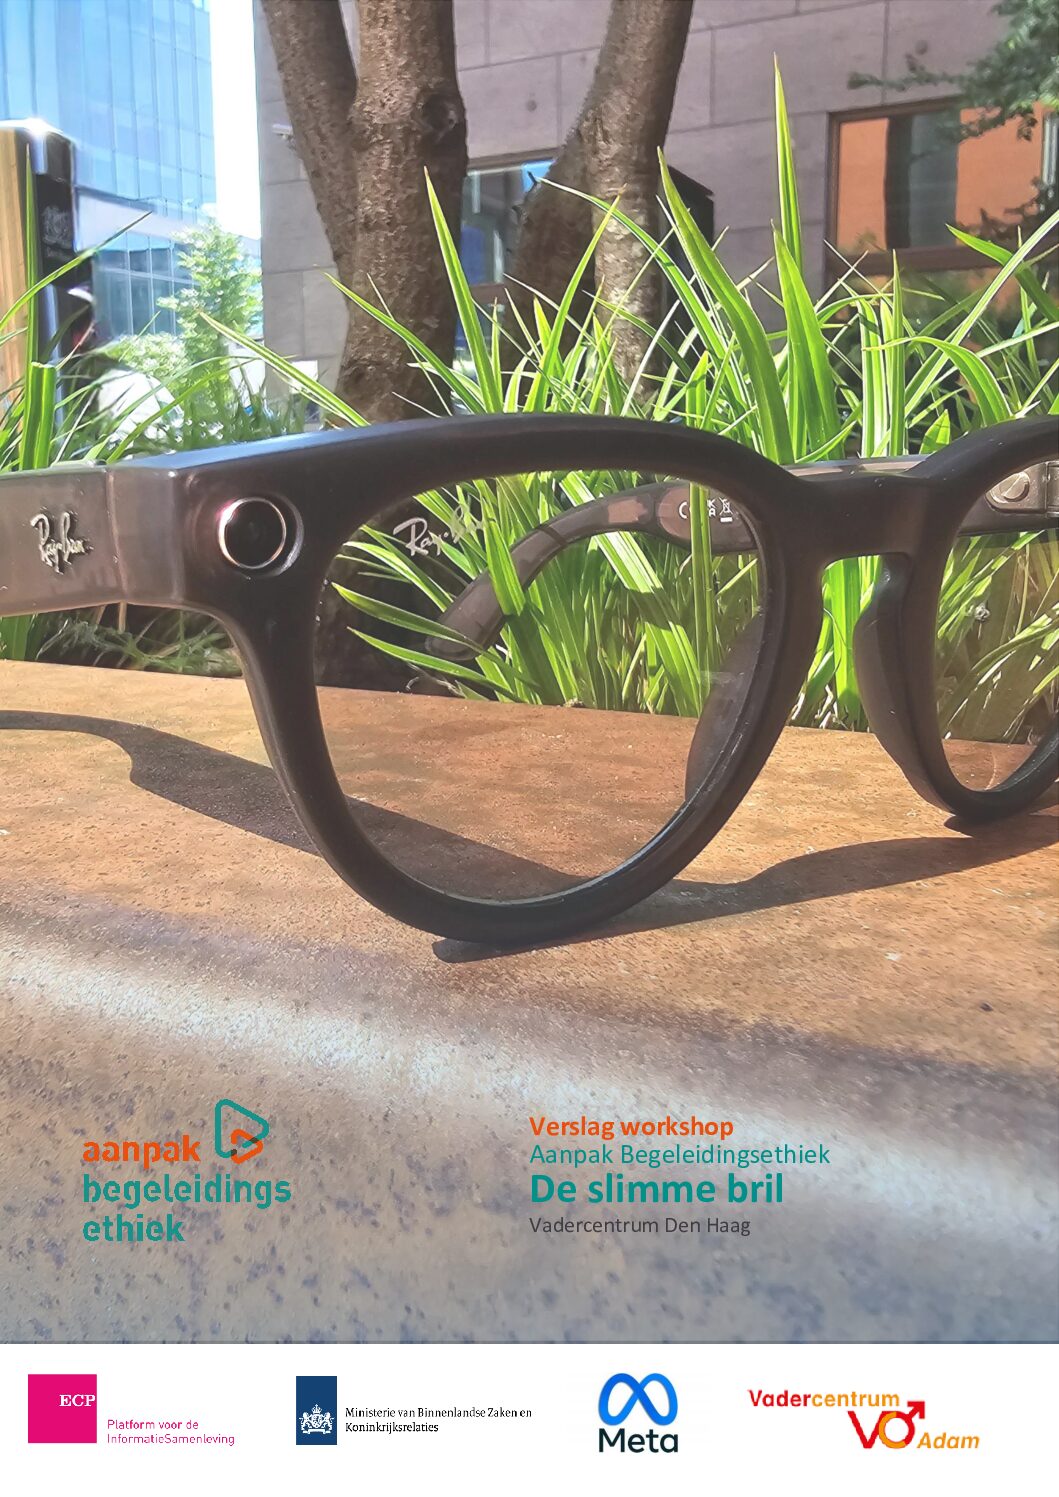 Vadercentrum Den Haag – De slimme bril